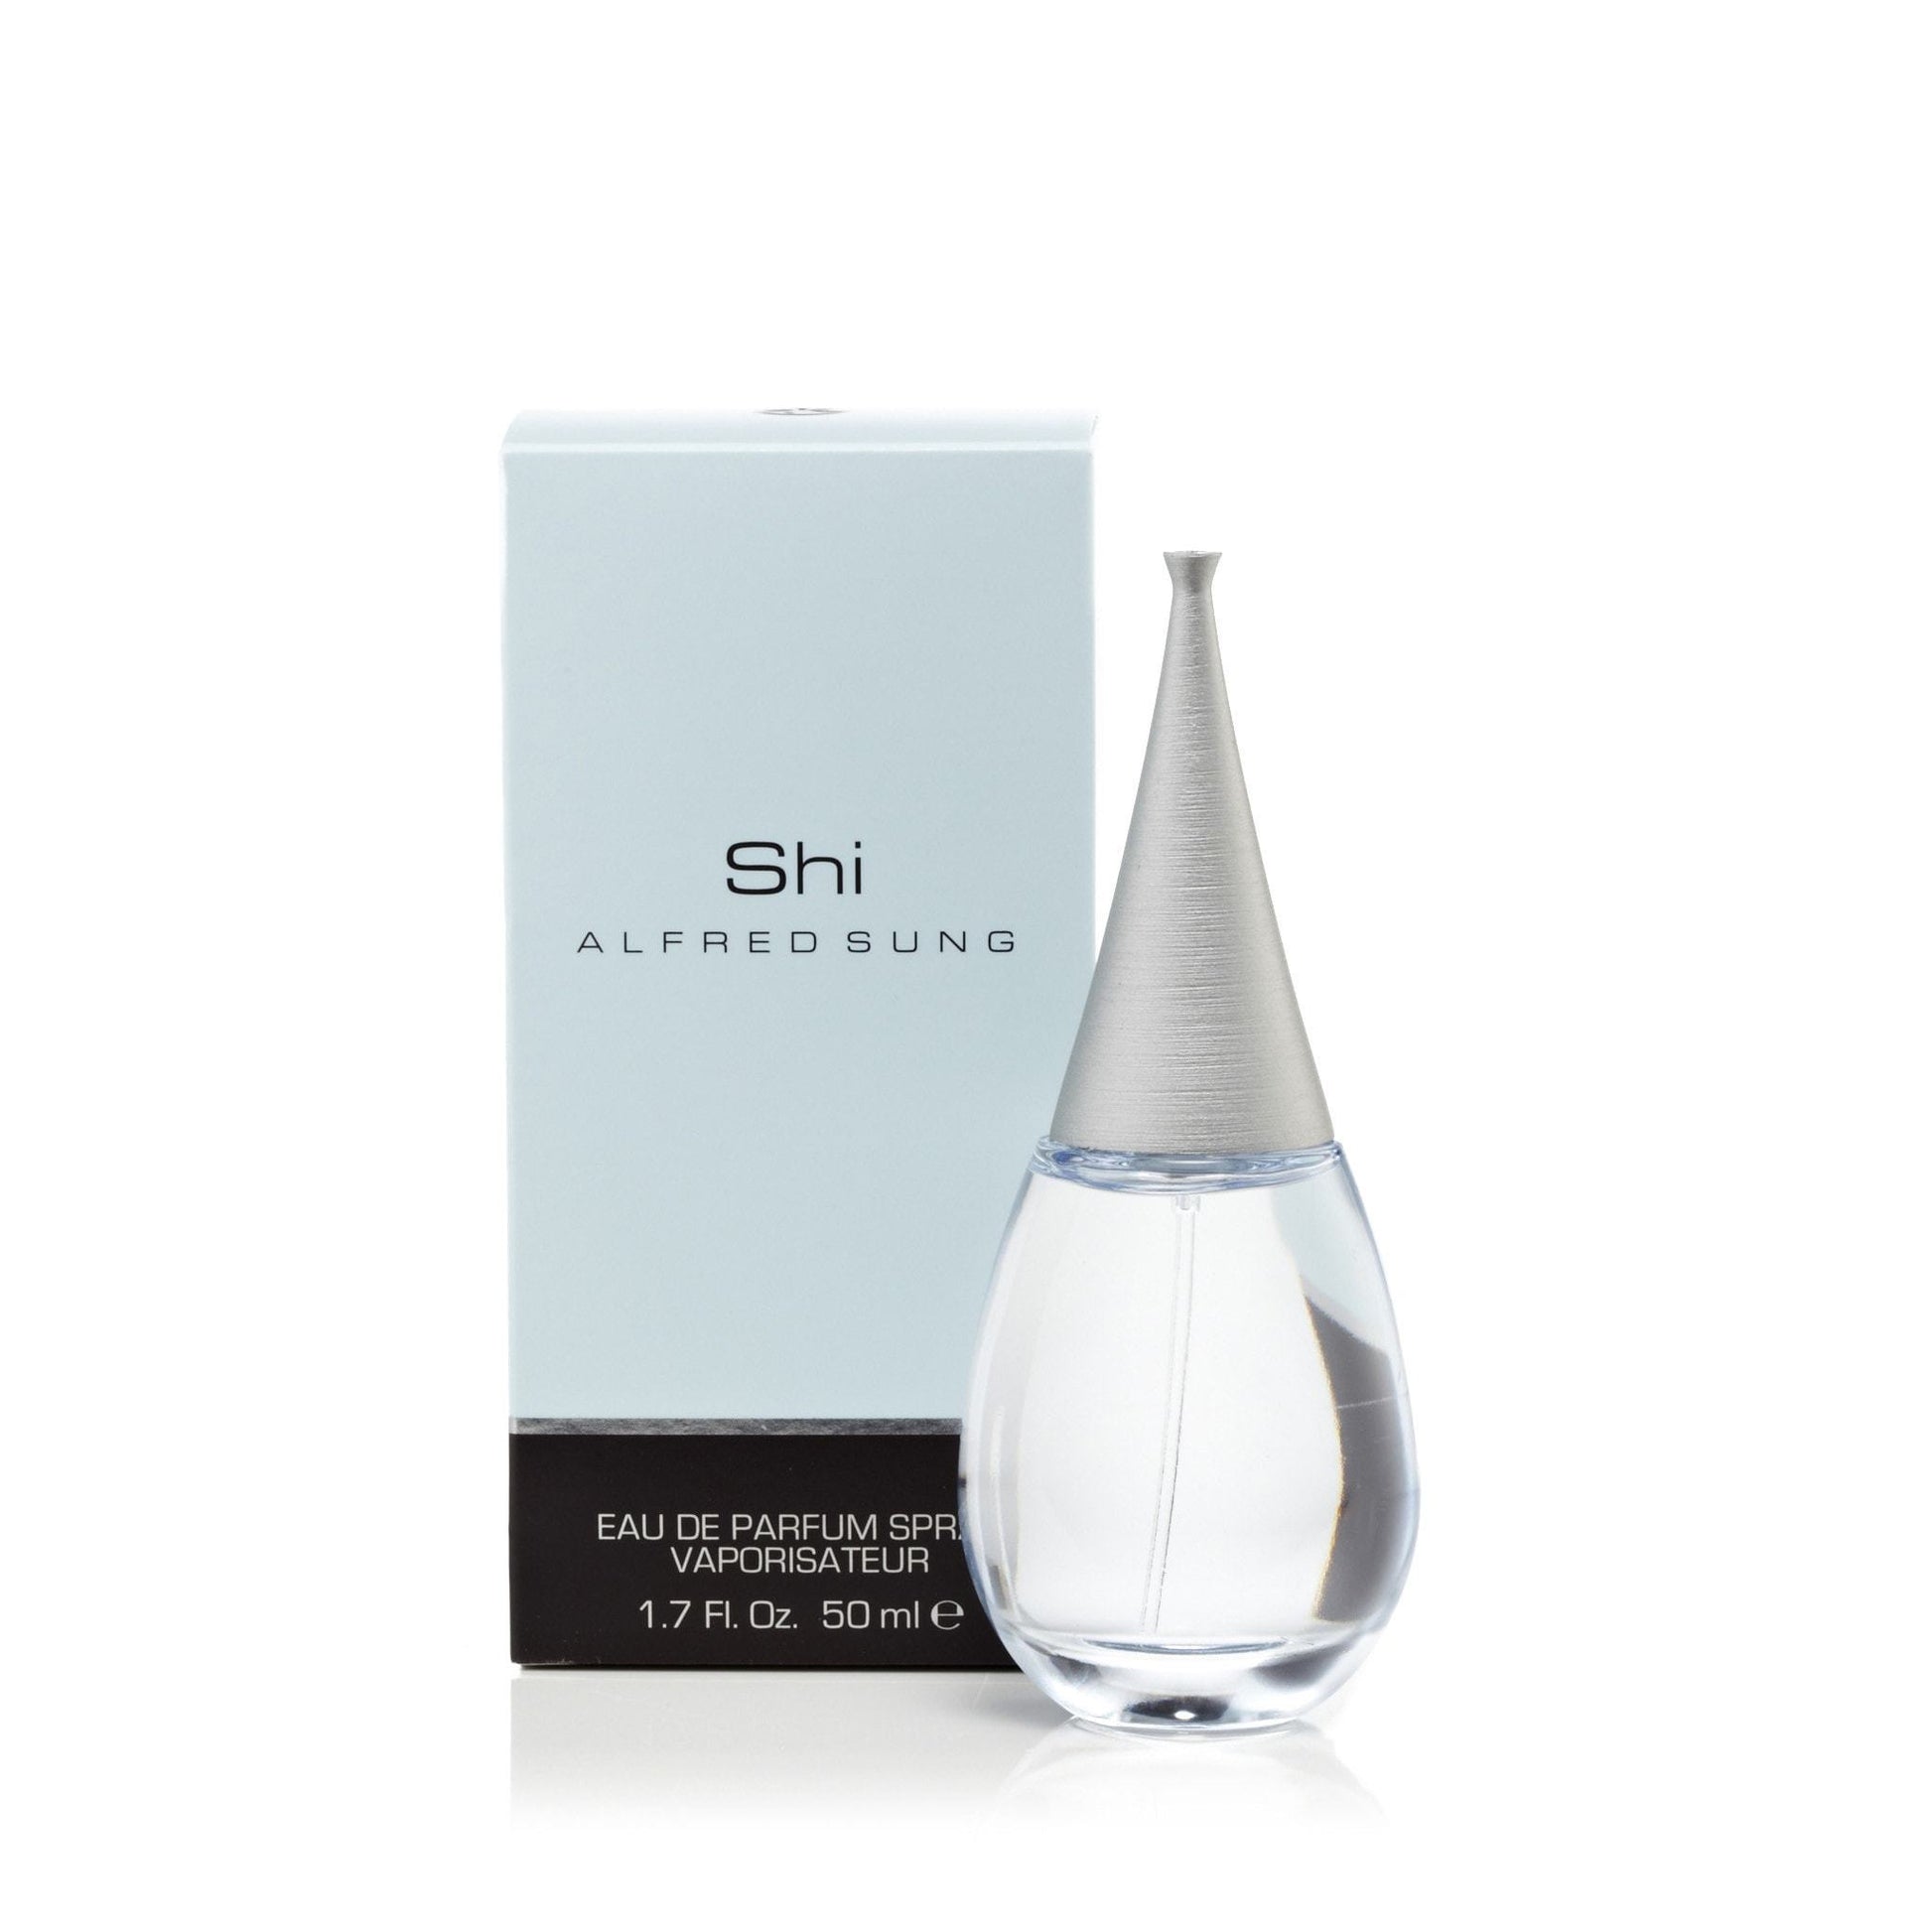 Shi Eau de Parfum Spray for Women by Alfred Sung, Product image 4